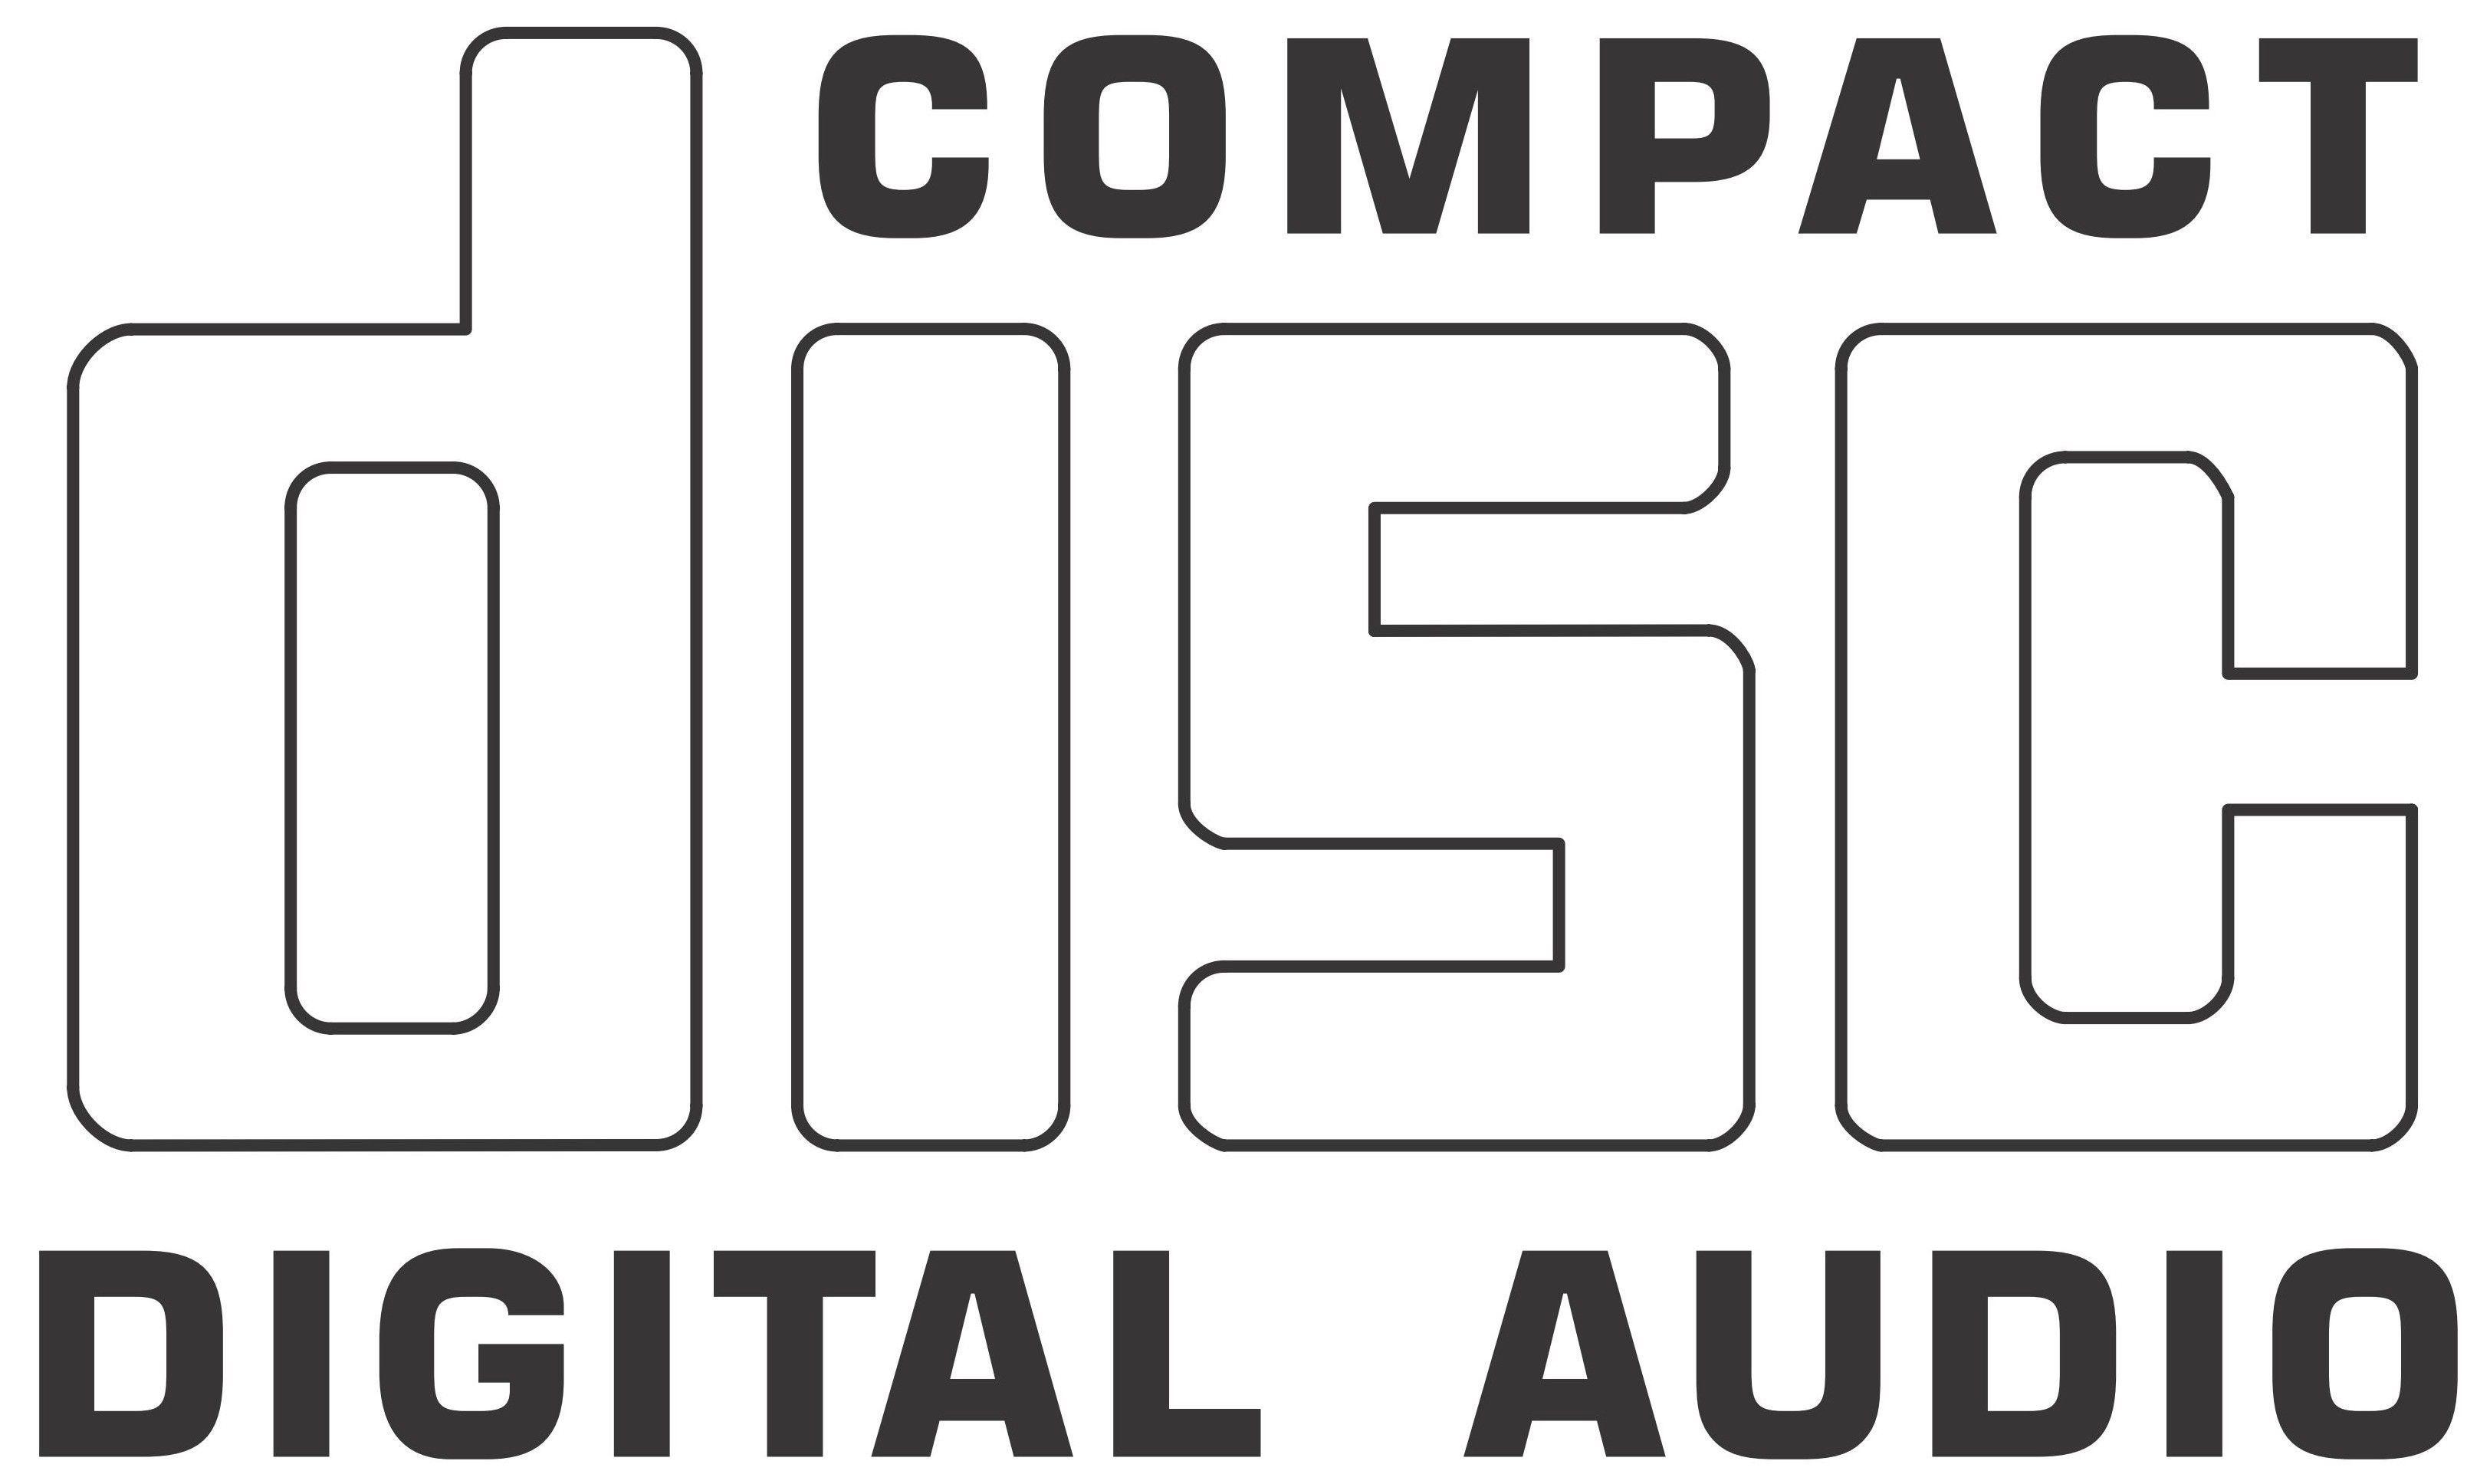 Compact Disc Logo - CD-Audio Logo [Compact Disc Digital Audio] | Carl Brooks | Logos, Cd ...